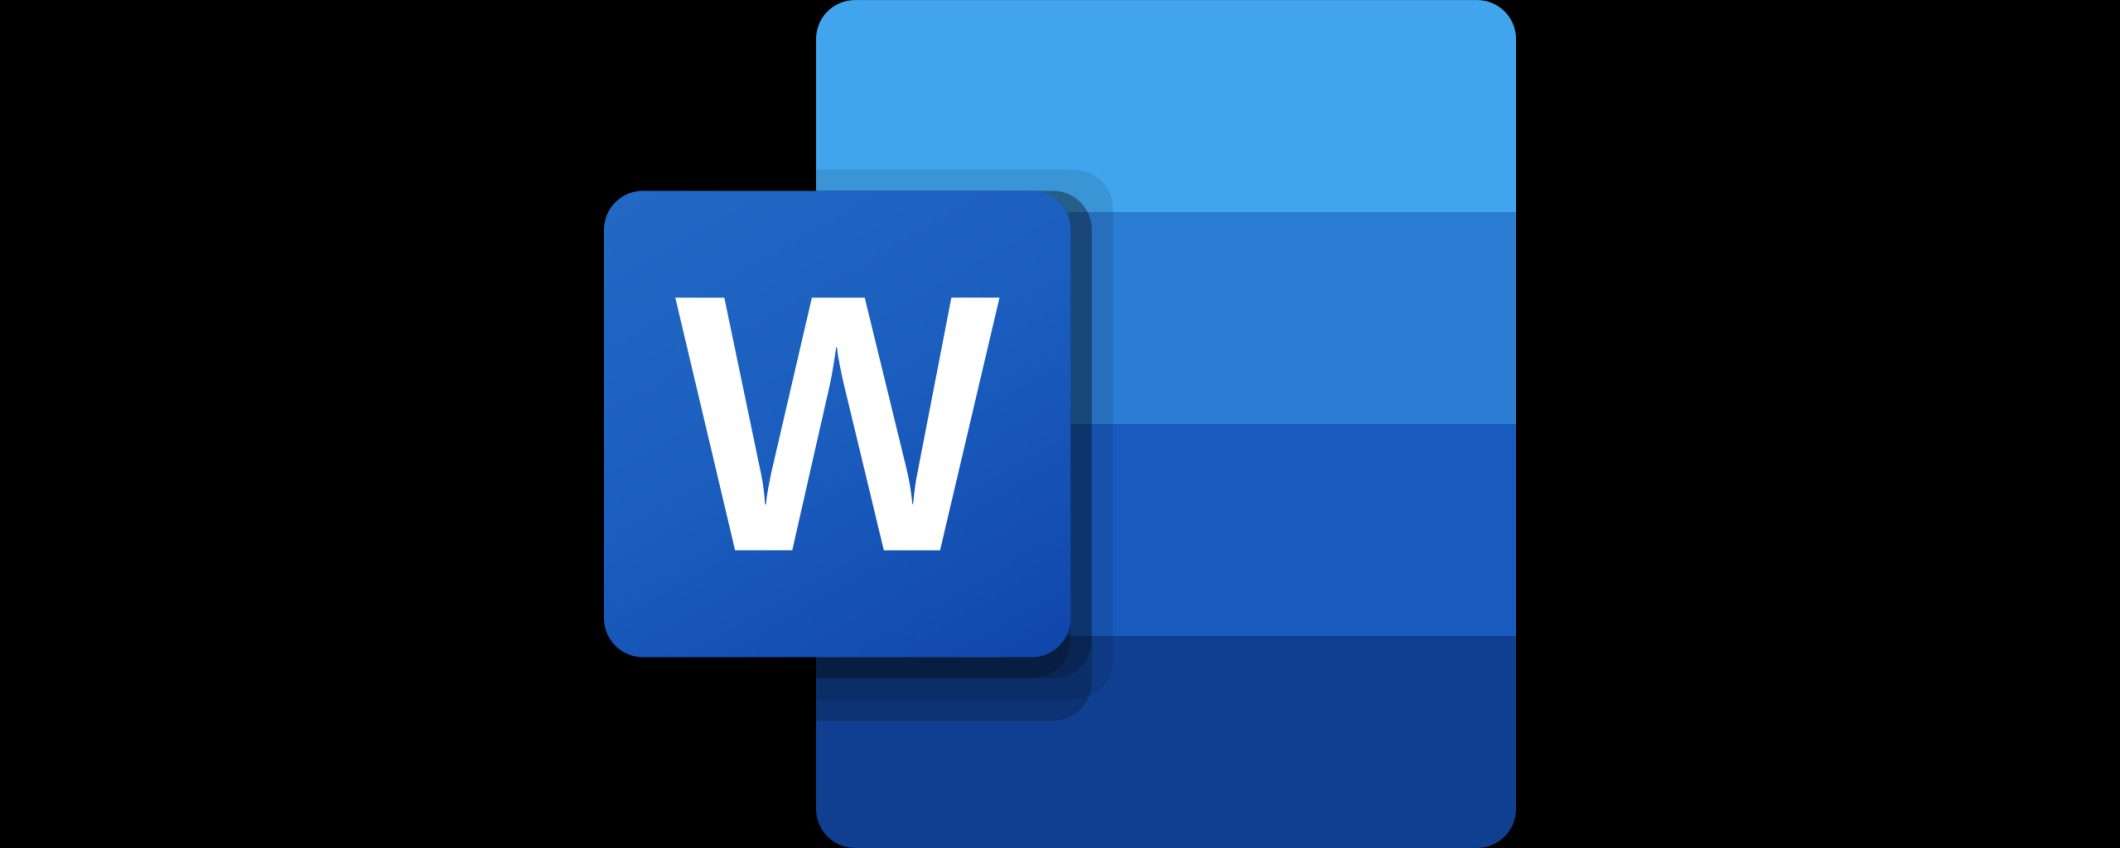 Microsoft Word compie 40 anni, tanti auguri!